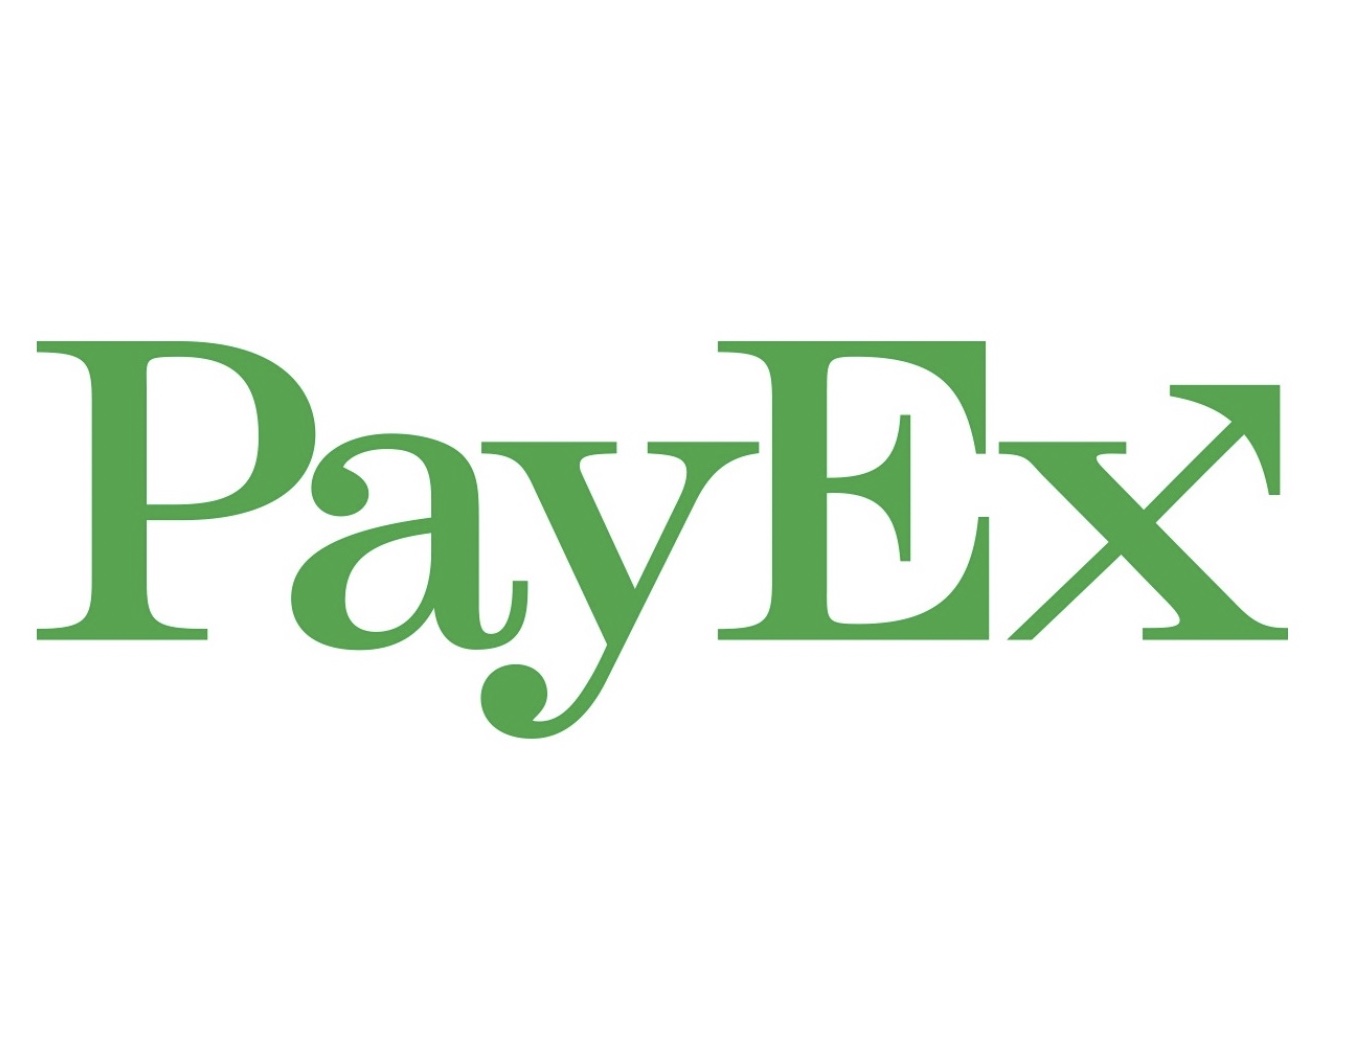 Academic Work - Tech support specialist till PayEx